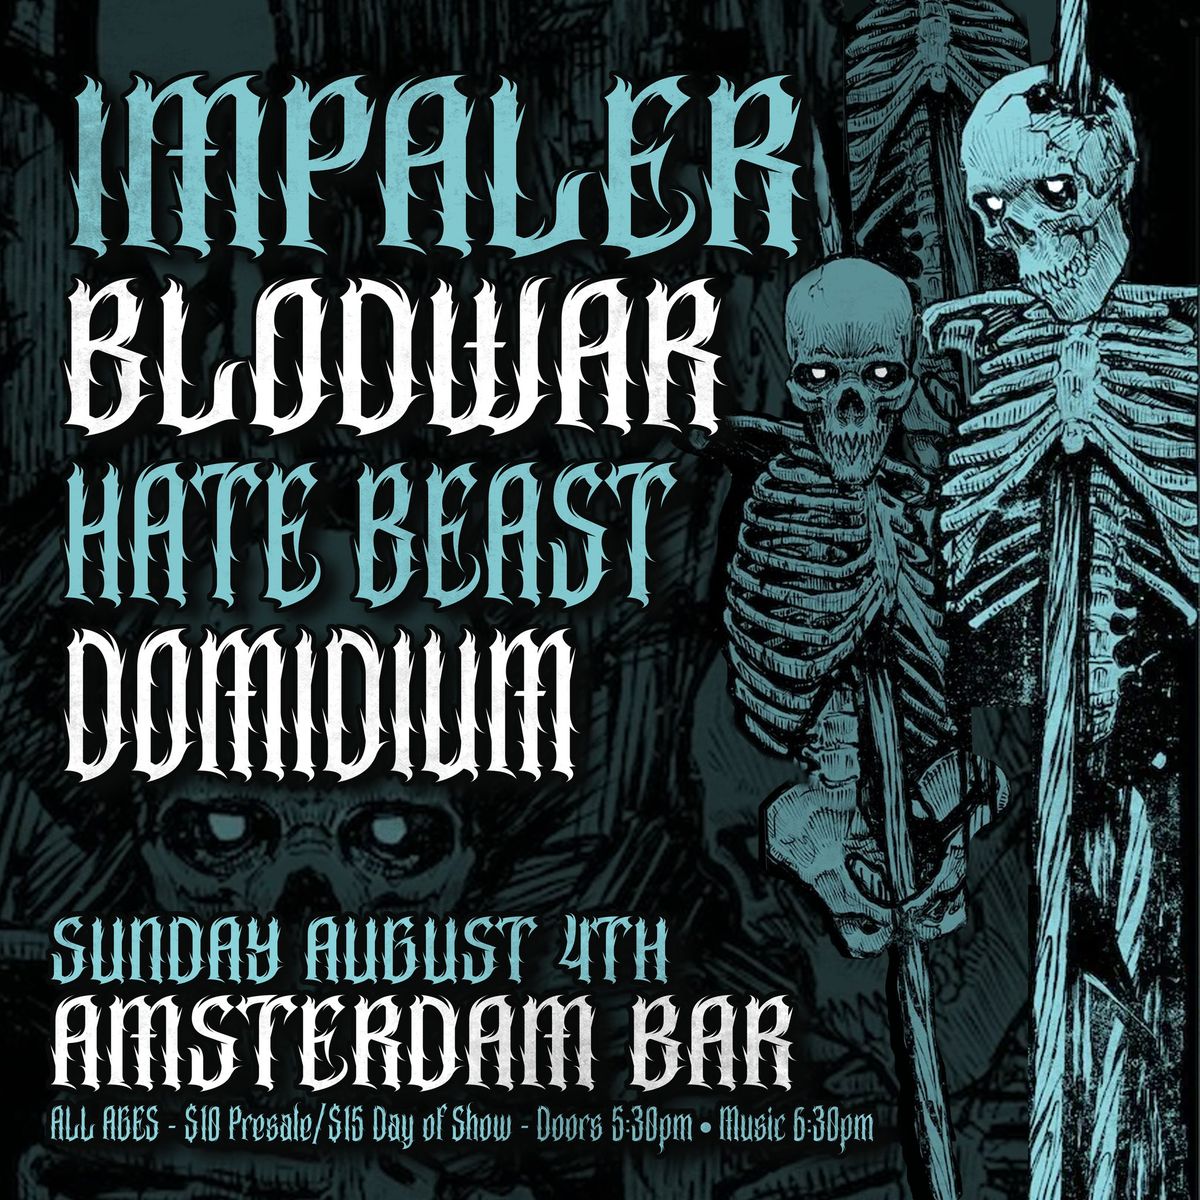 Impaler, Blodwar, Hate Beast, Domidium at the Amsterdam